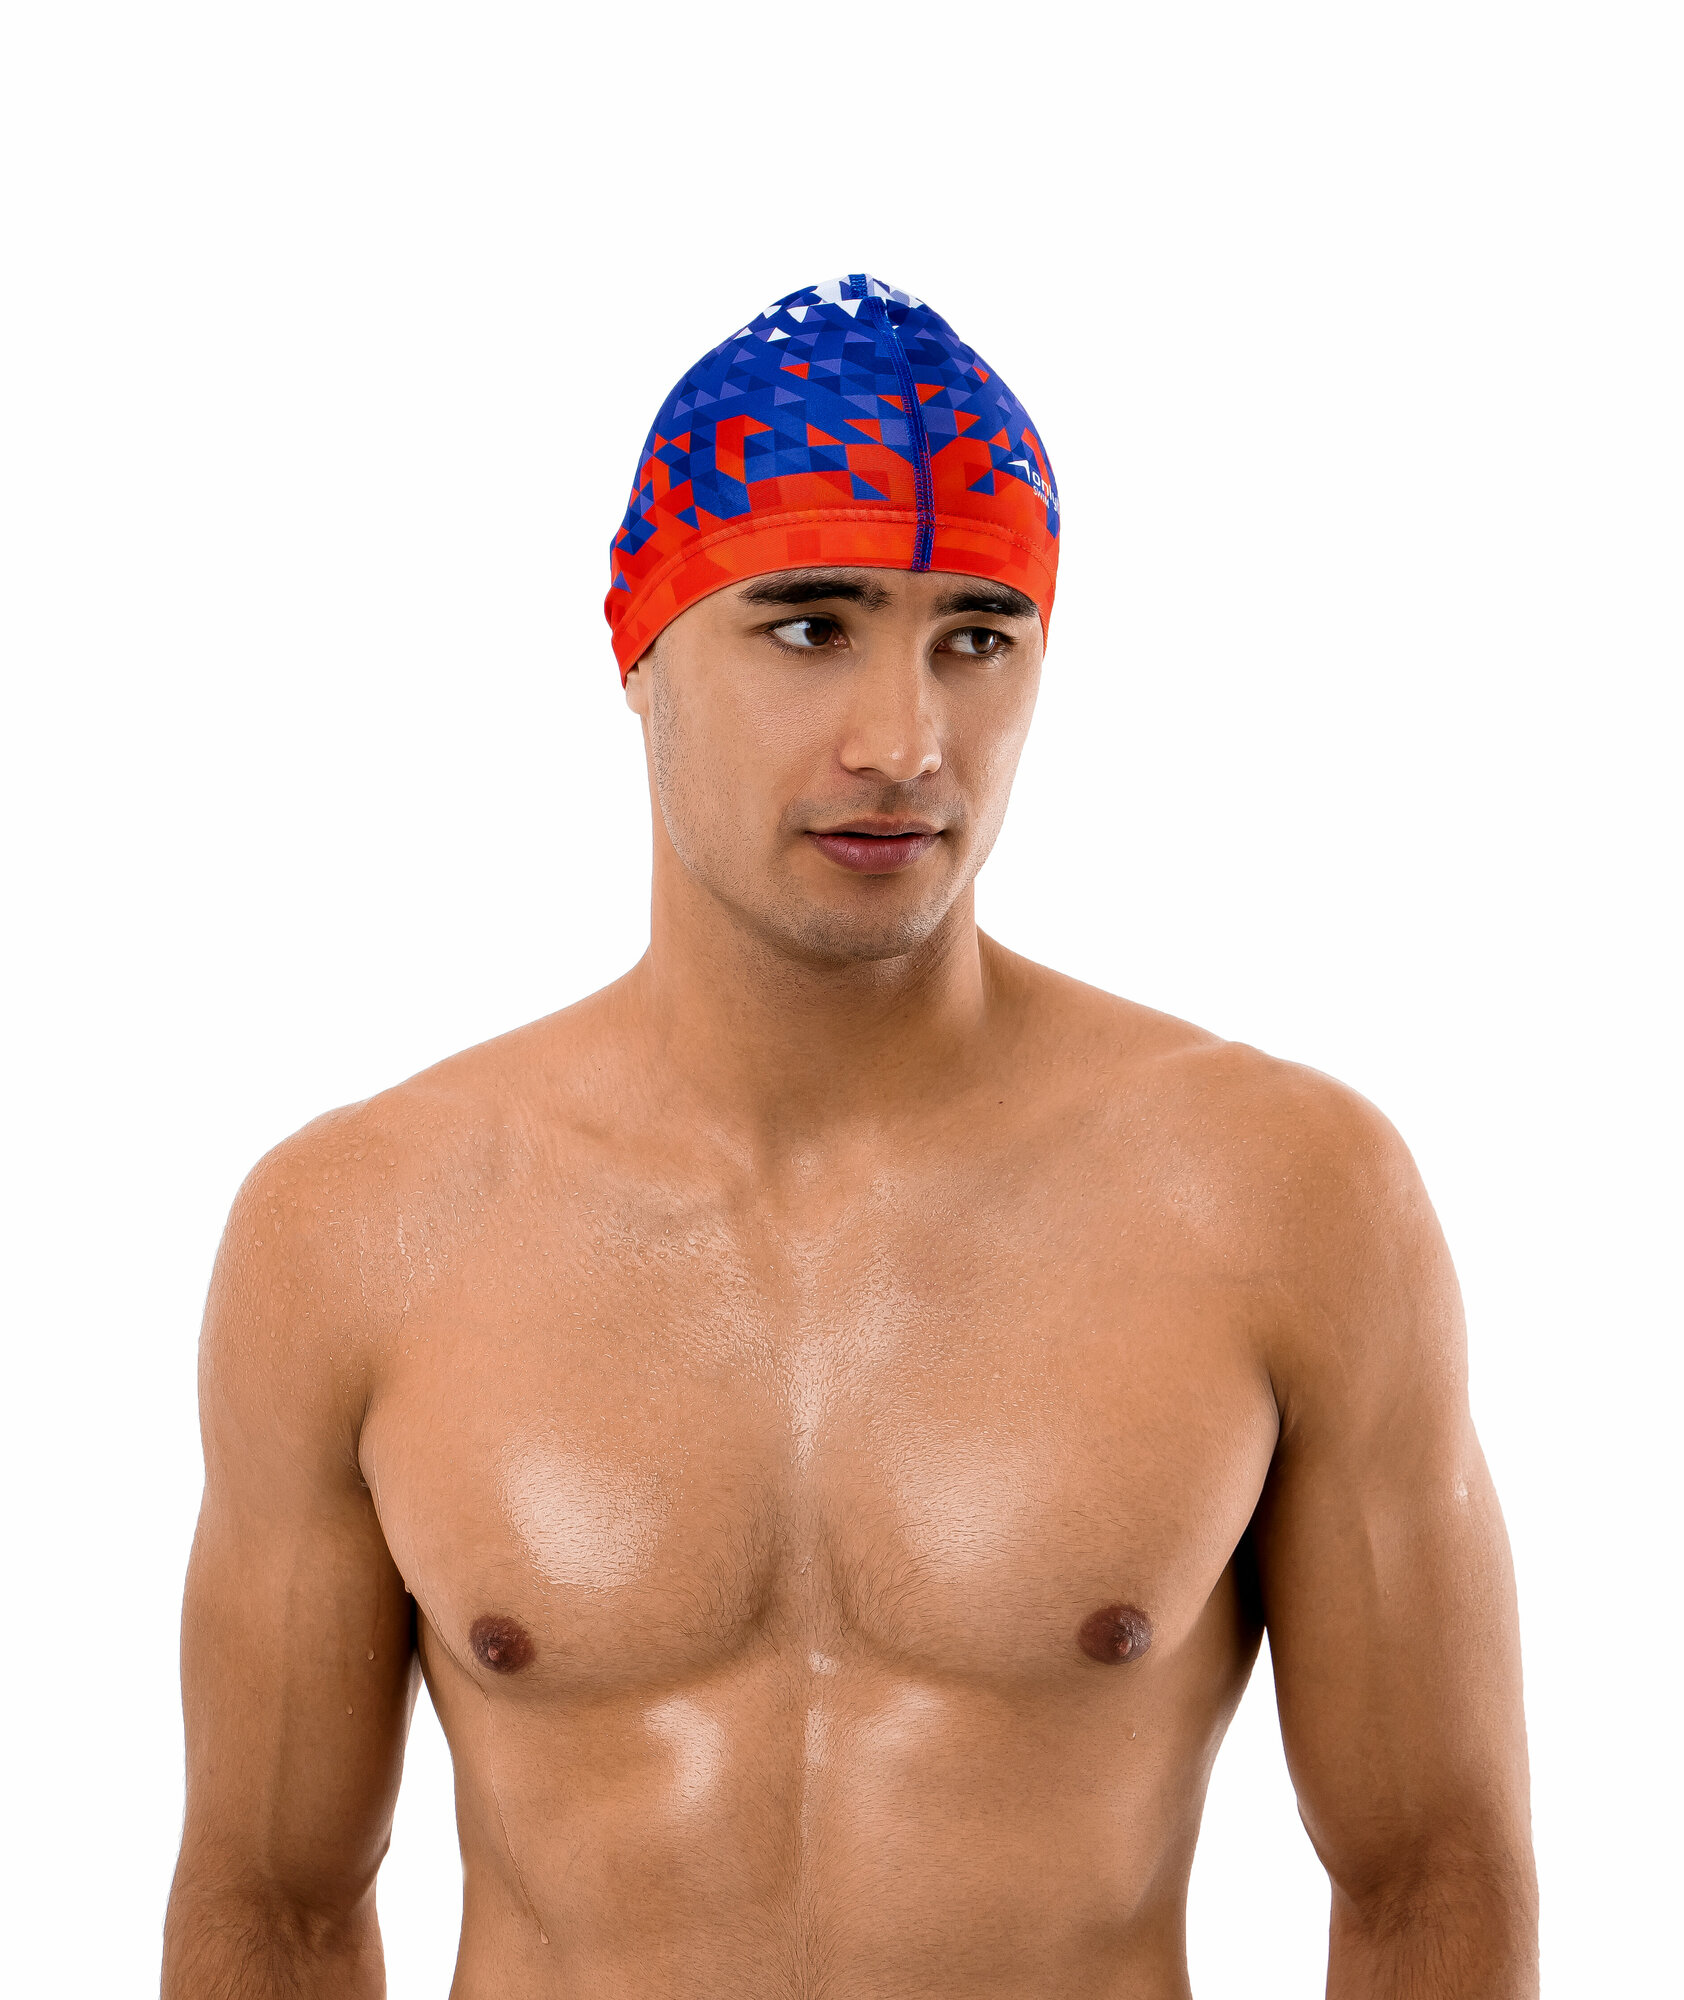 Шапочка ONLYTOP "Swim", для плавания, взрослая, тканевая, обхват 54-60 см, разноцветная